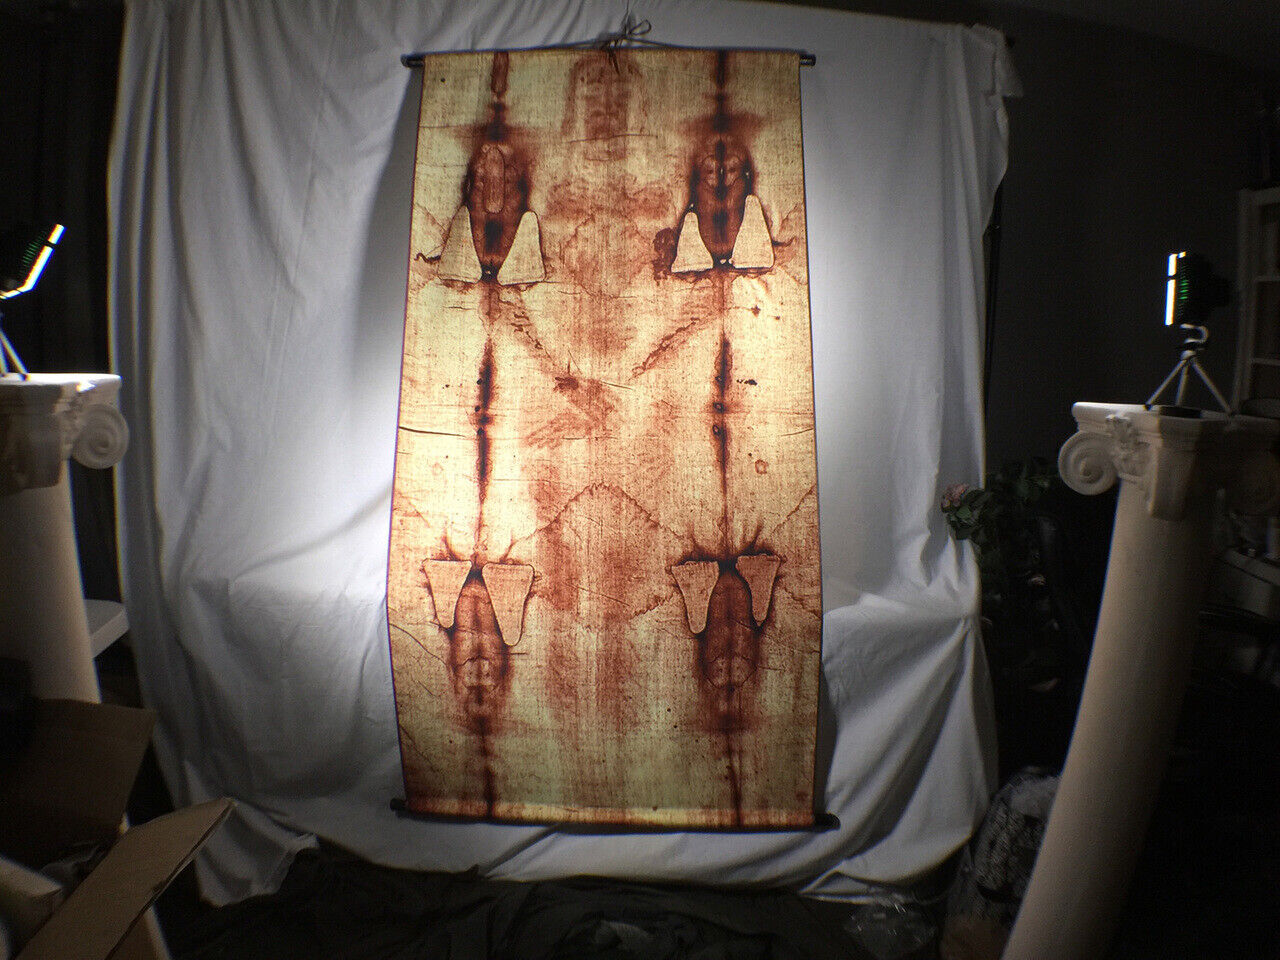 Shroud of Turin, Full Size Body, Sepia on Linen Cloth, 6 x 3 feet, Free Book